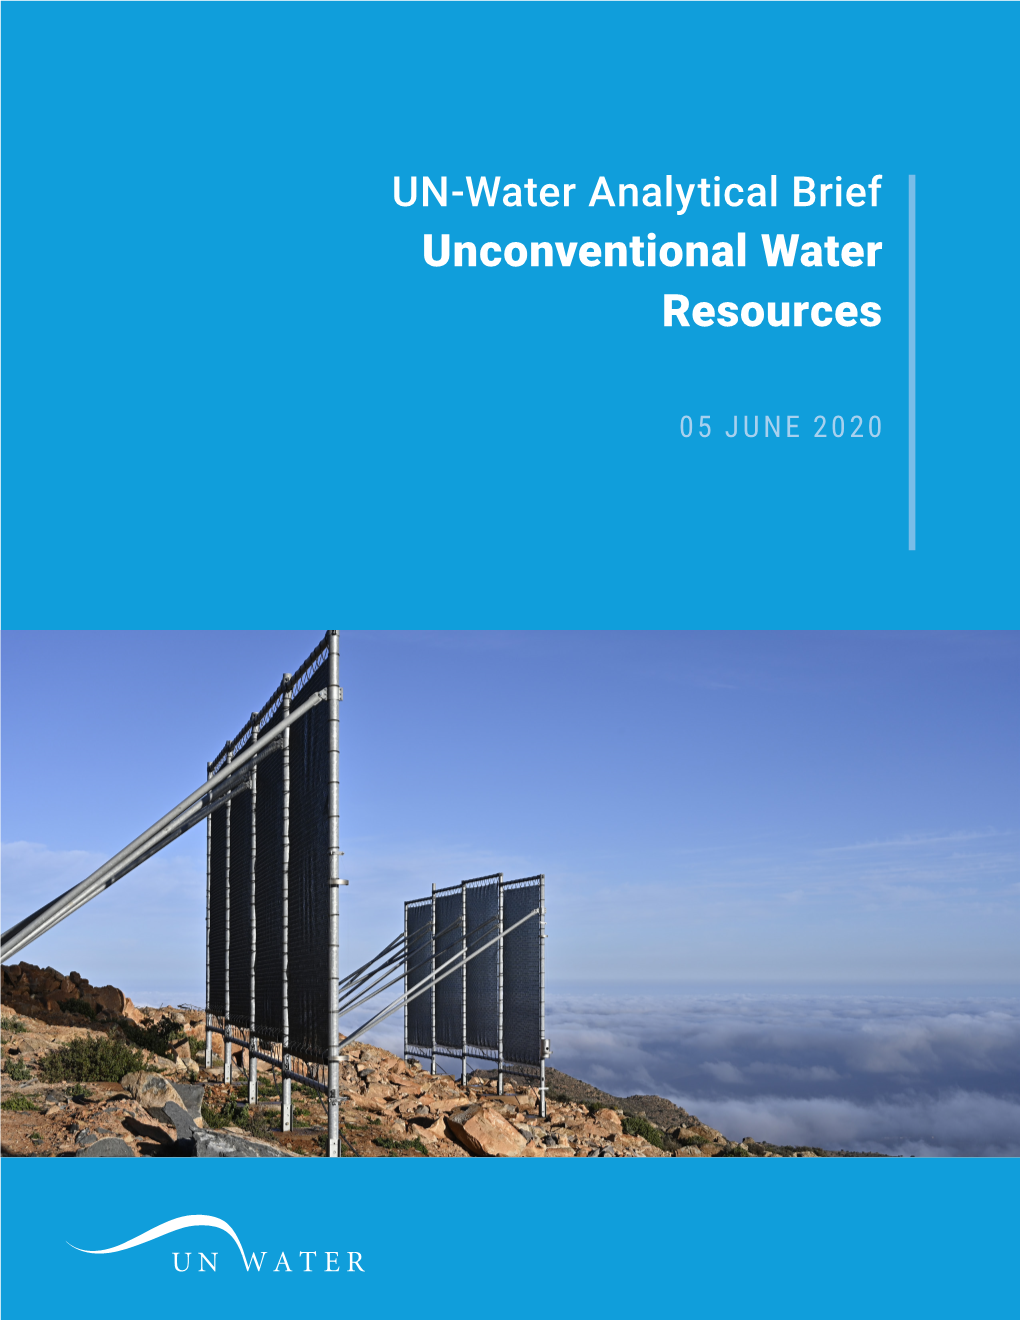 UN-Water Analytical Brief on Unconventional Water Resources